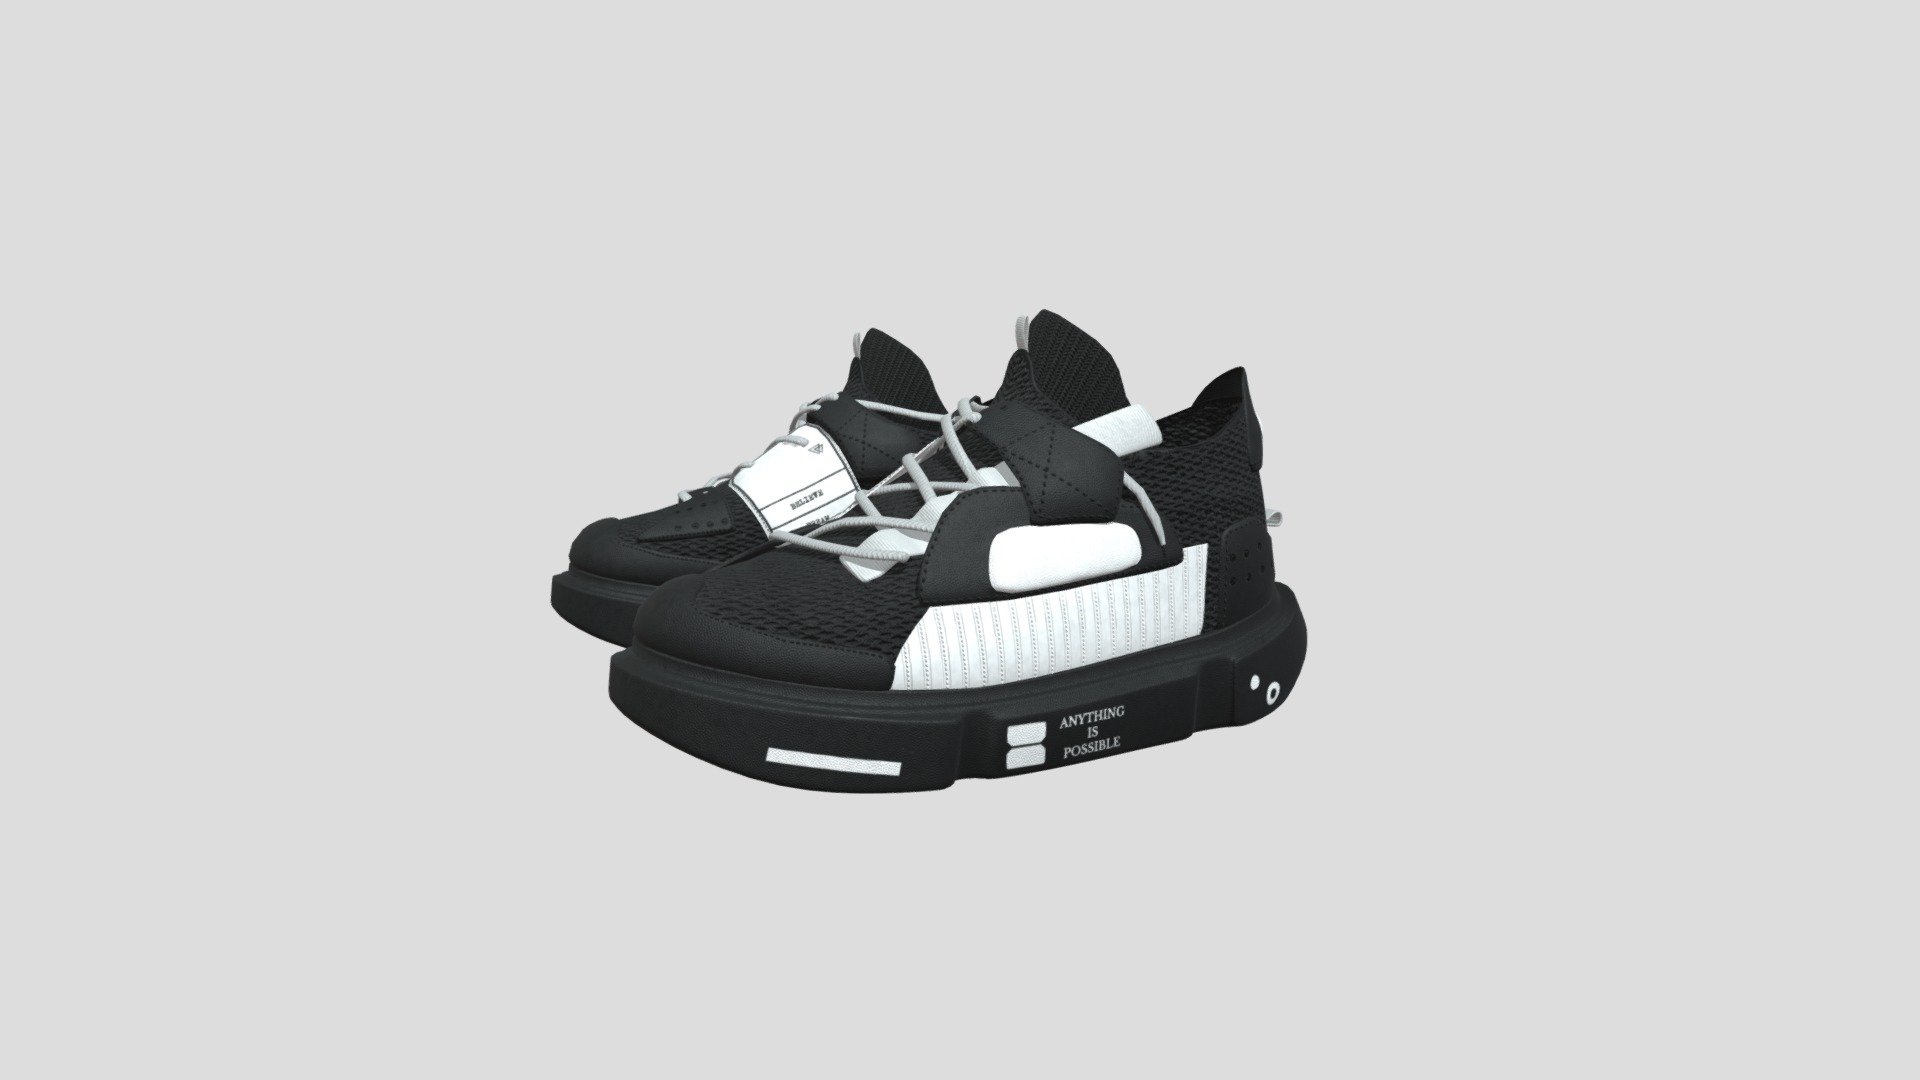 FU Sneakers By VapeQ - 3D model by VapeQ [7a1ff90] - Sketchfab